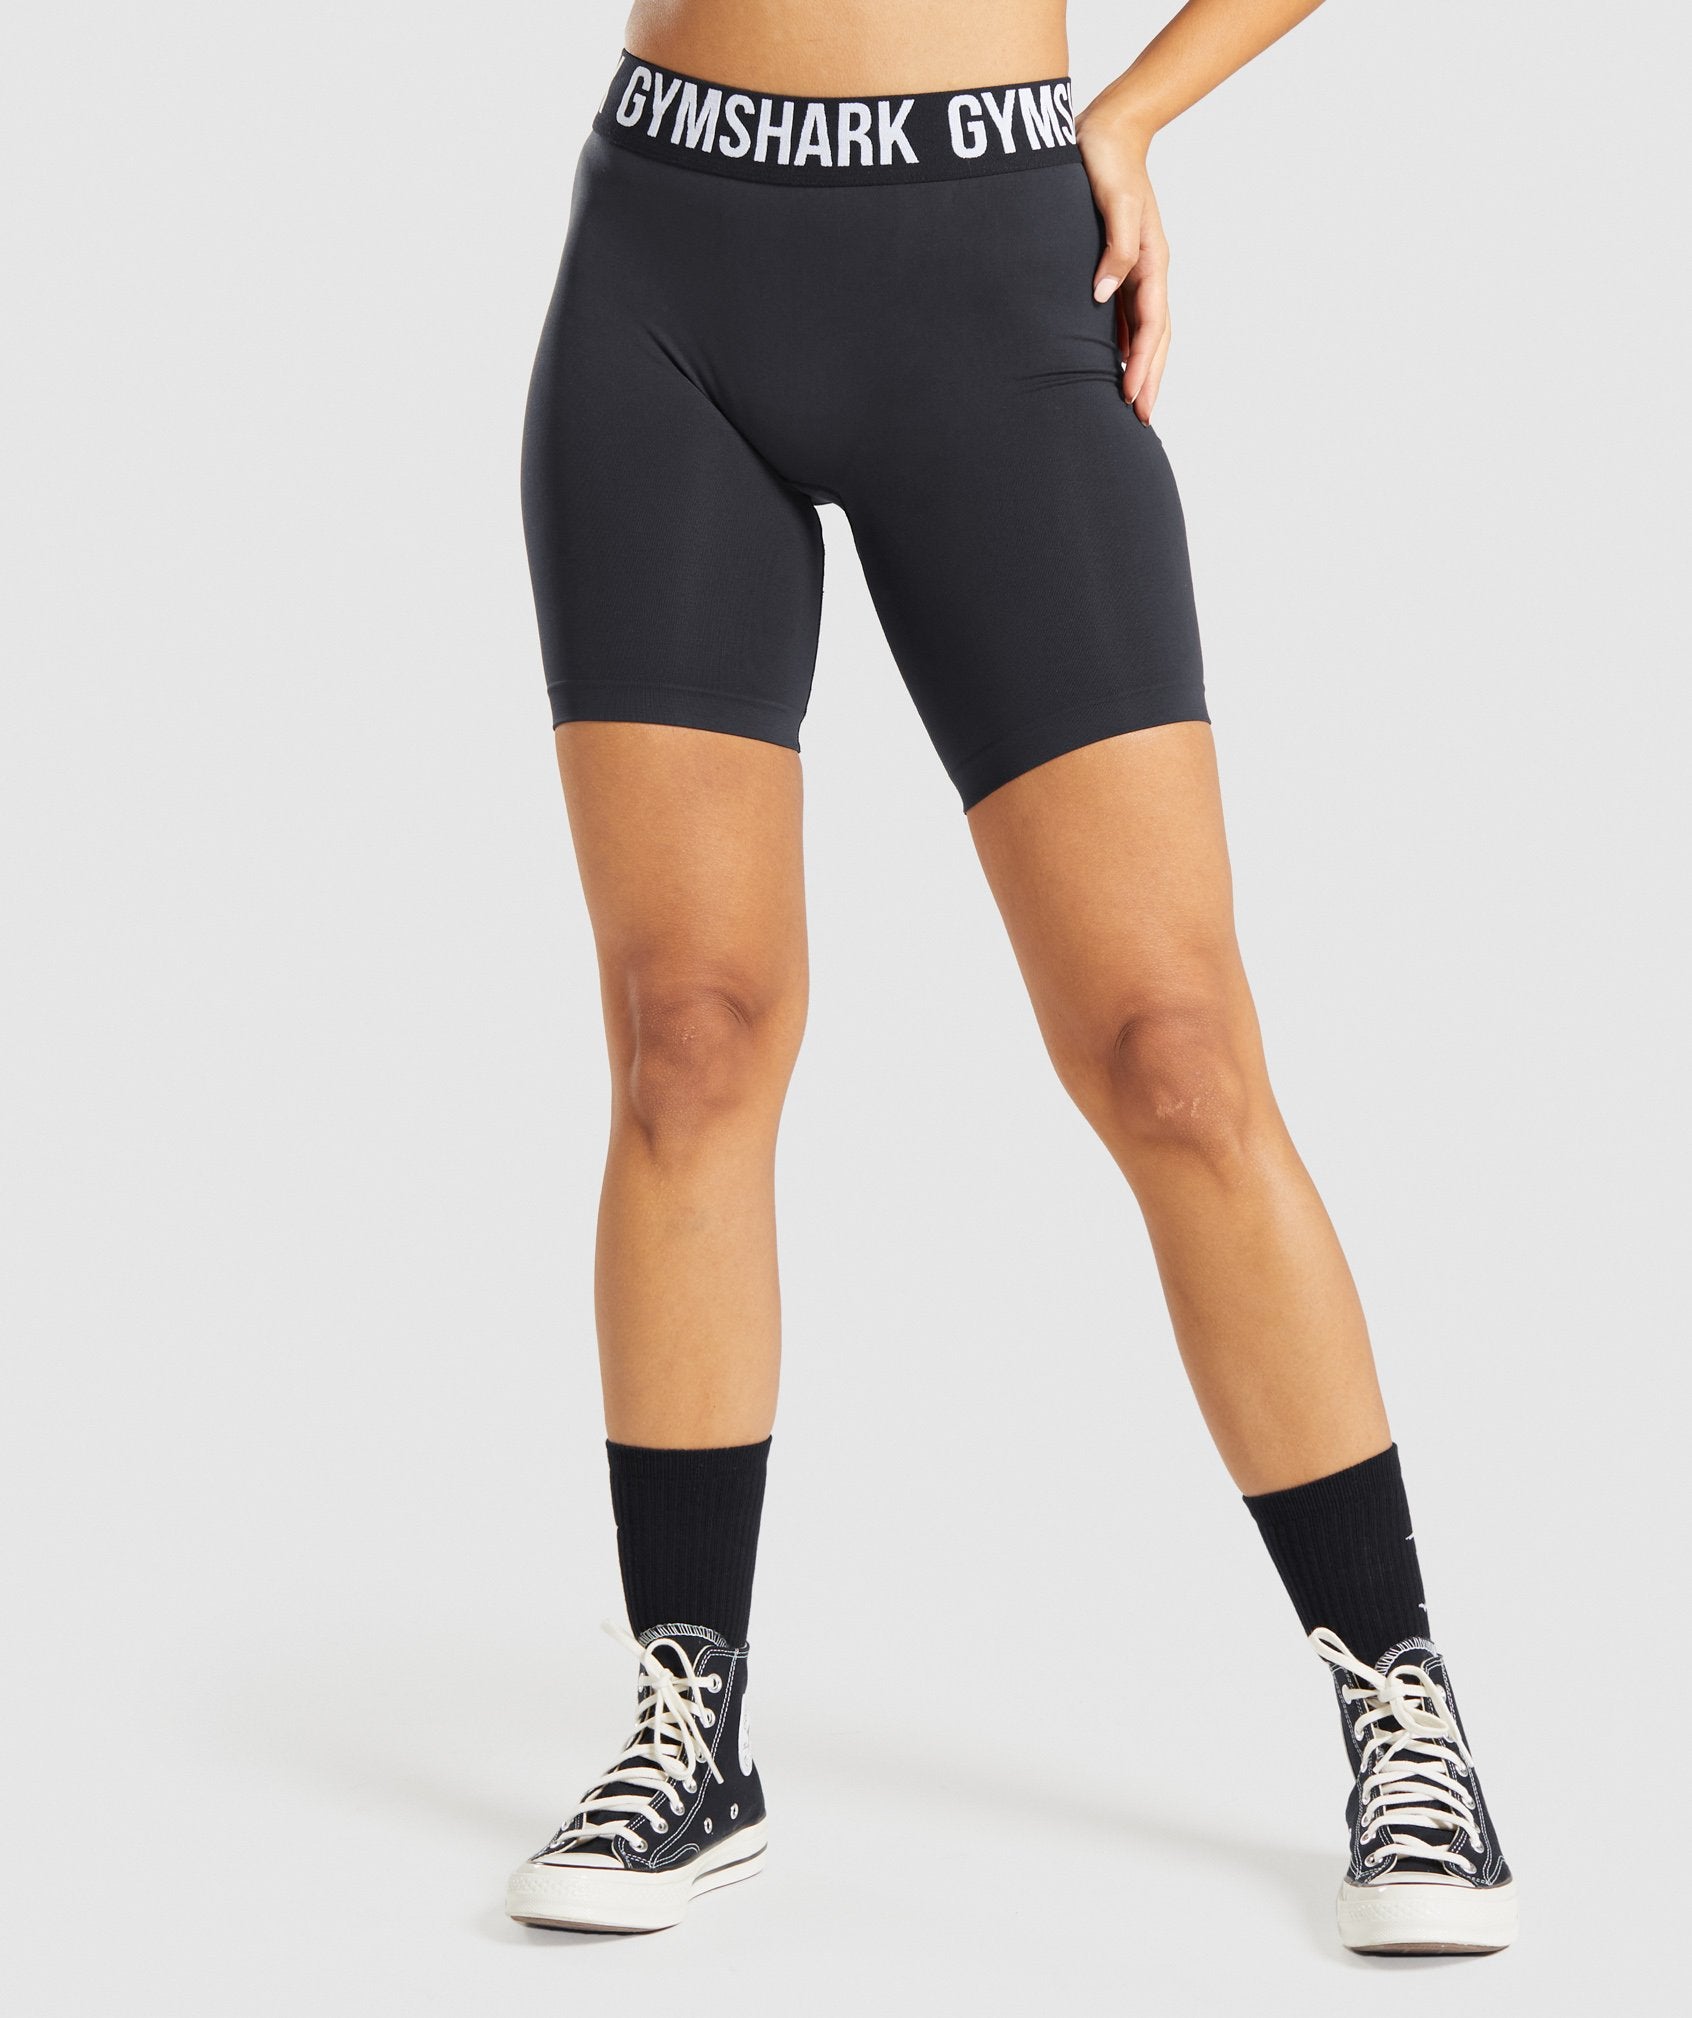 gymshark black cycling shorts